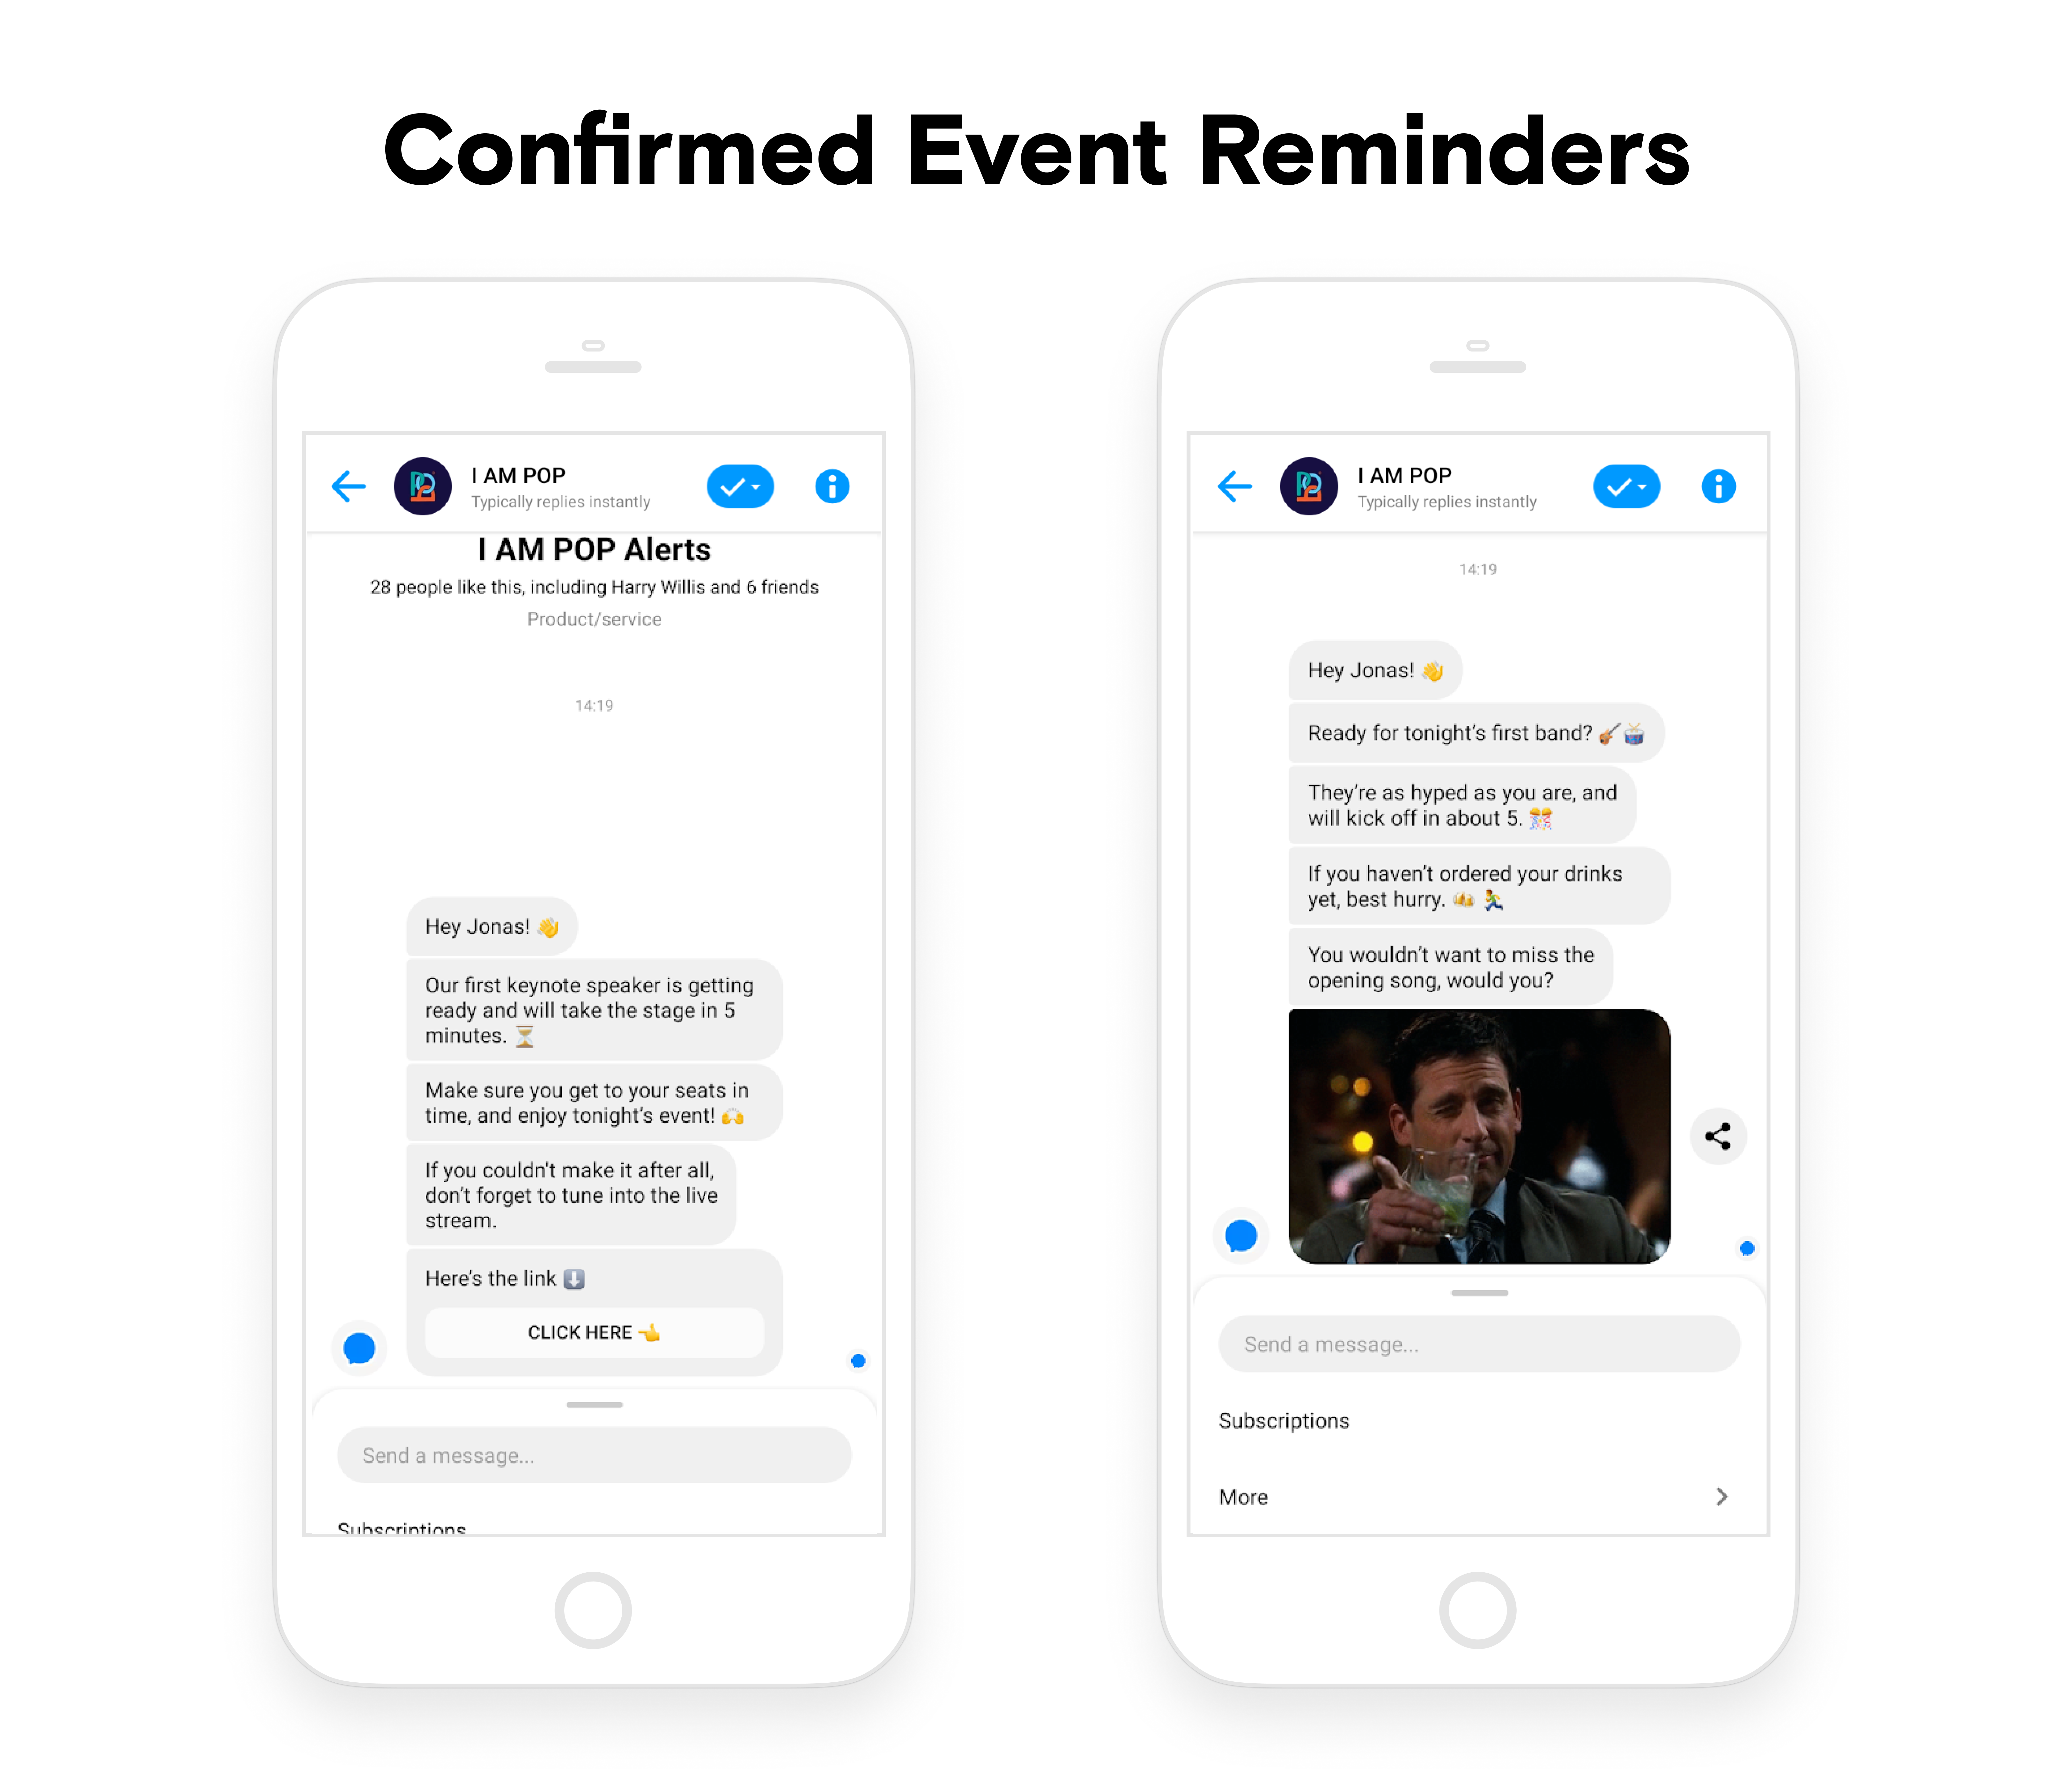 Confirmed-Event-Reminder-update-broadcasts